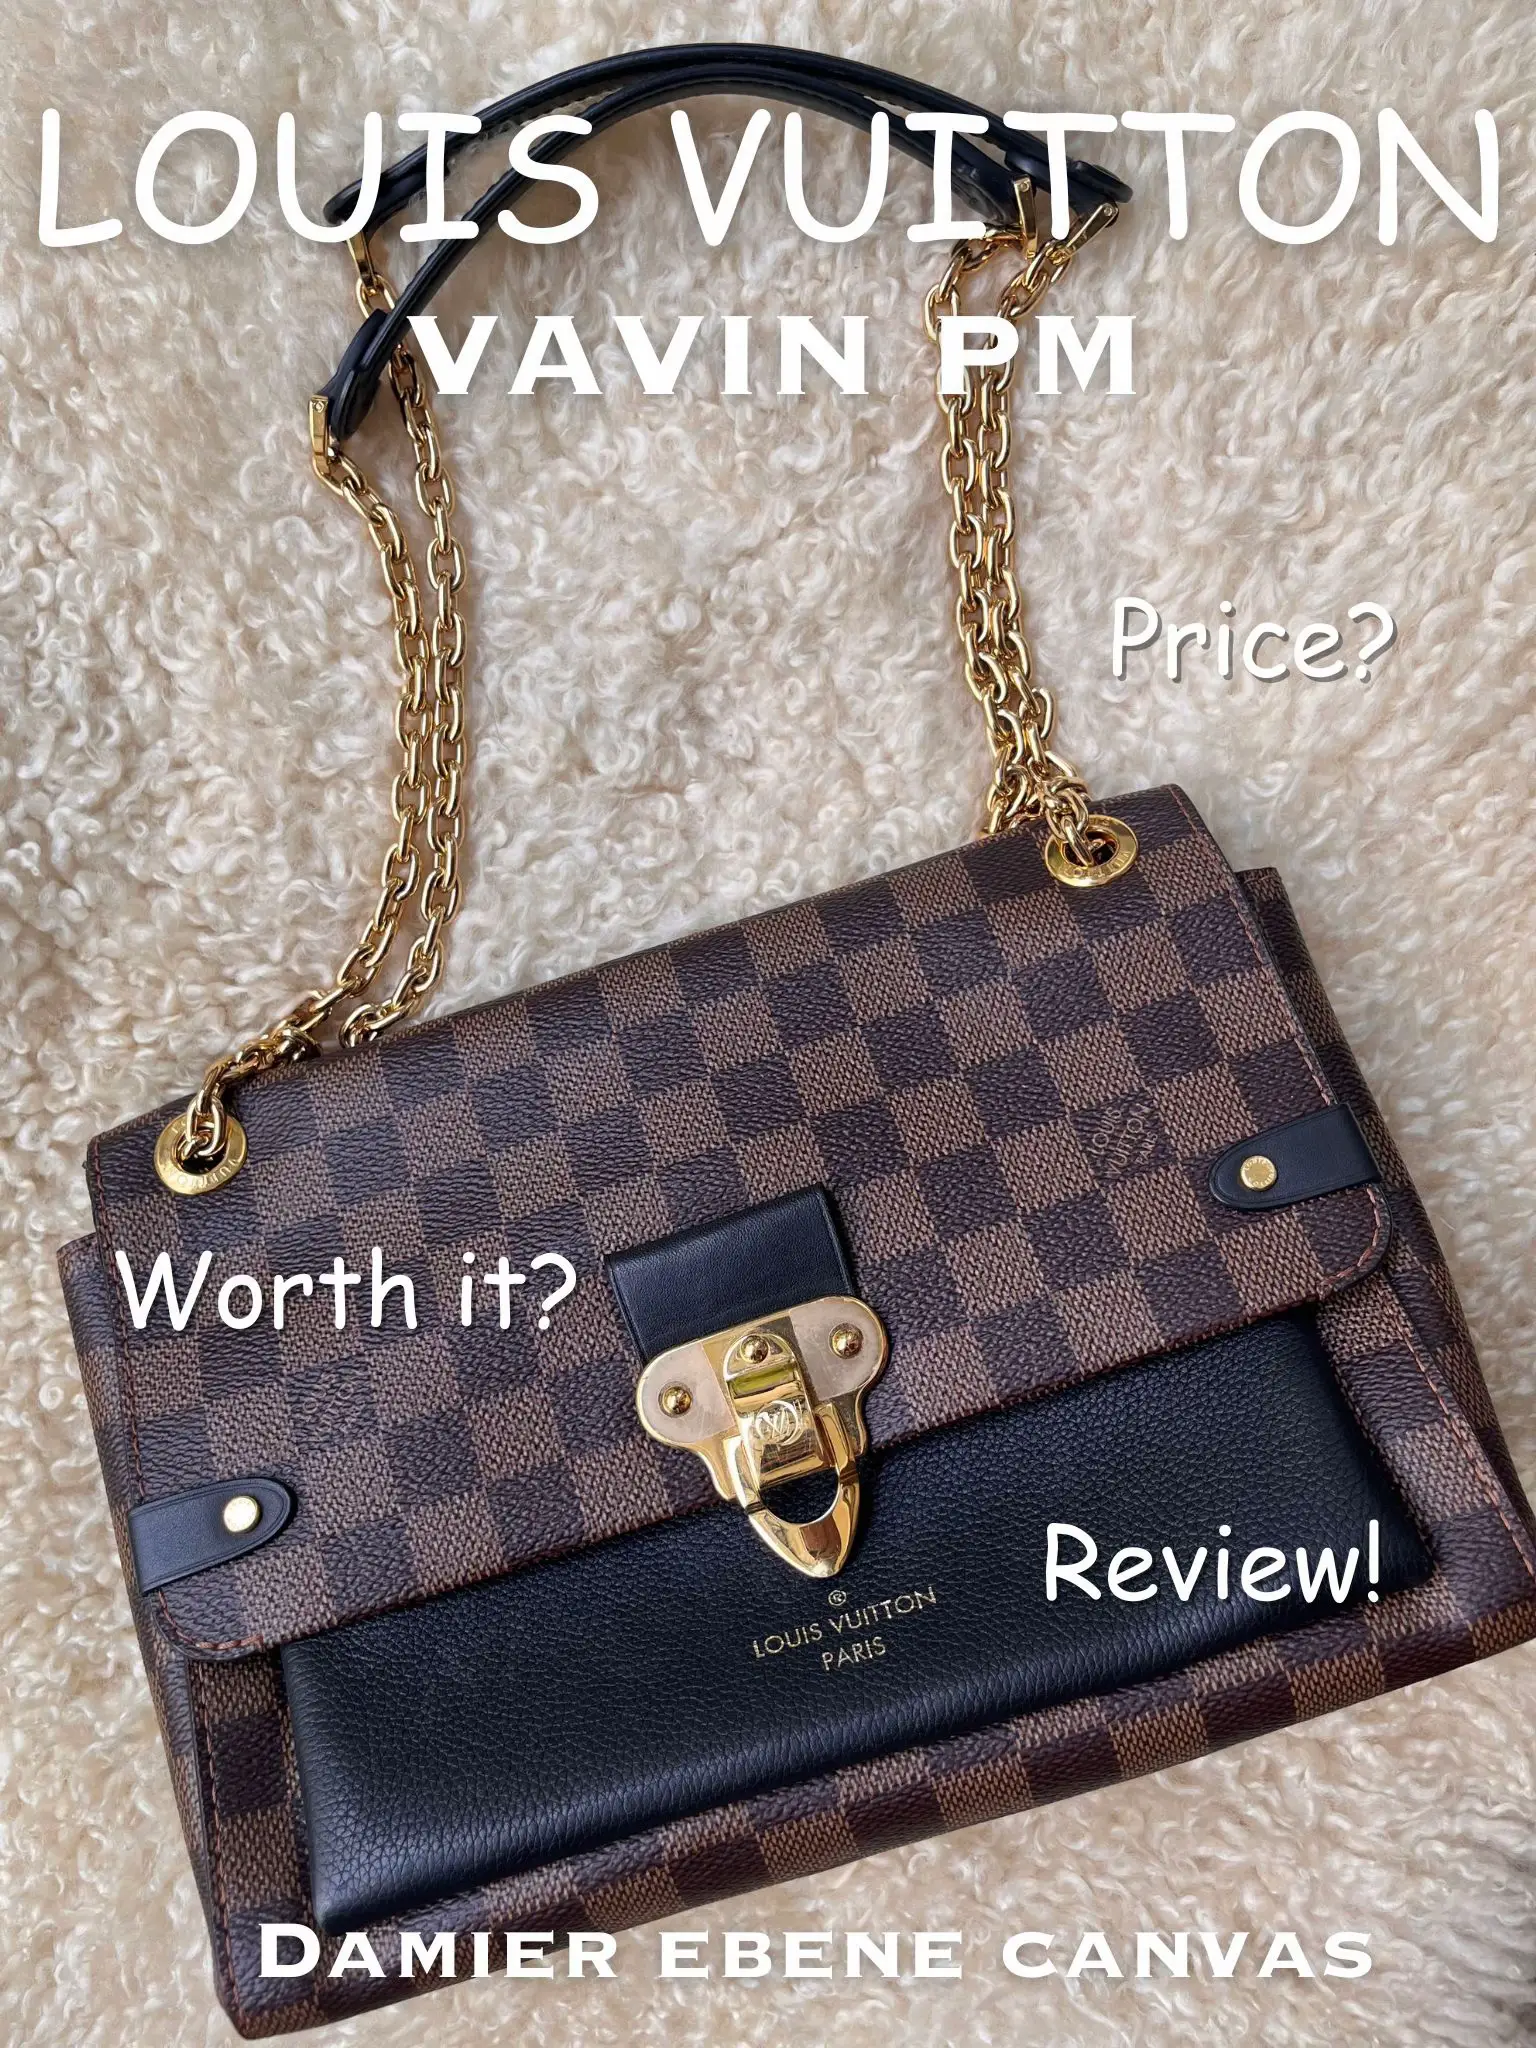 Louis Vuitton Vavin Pm Review!, Gallery posted by Kiara Seframeta